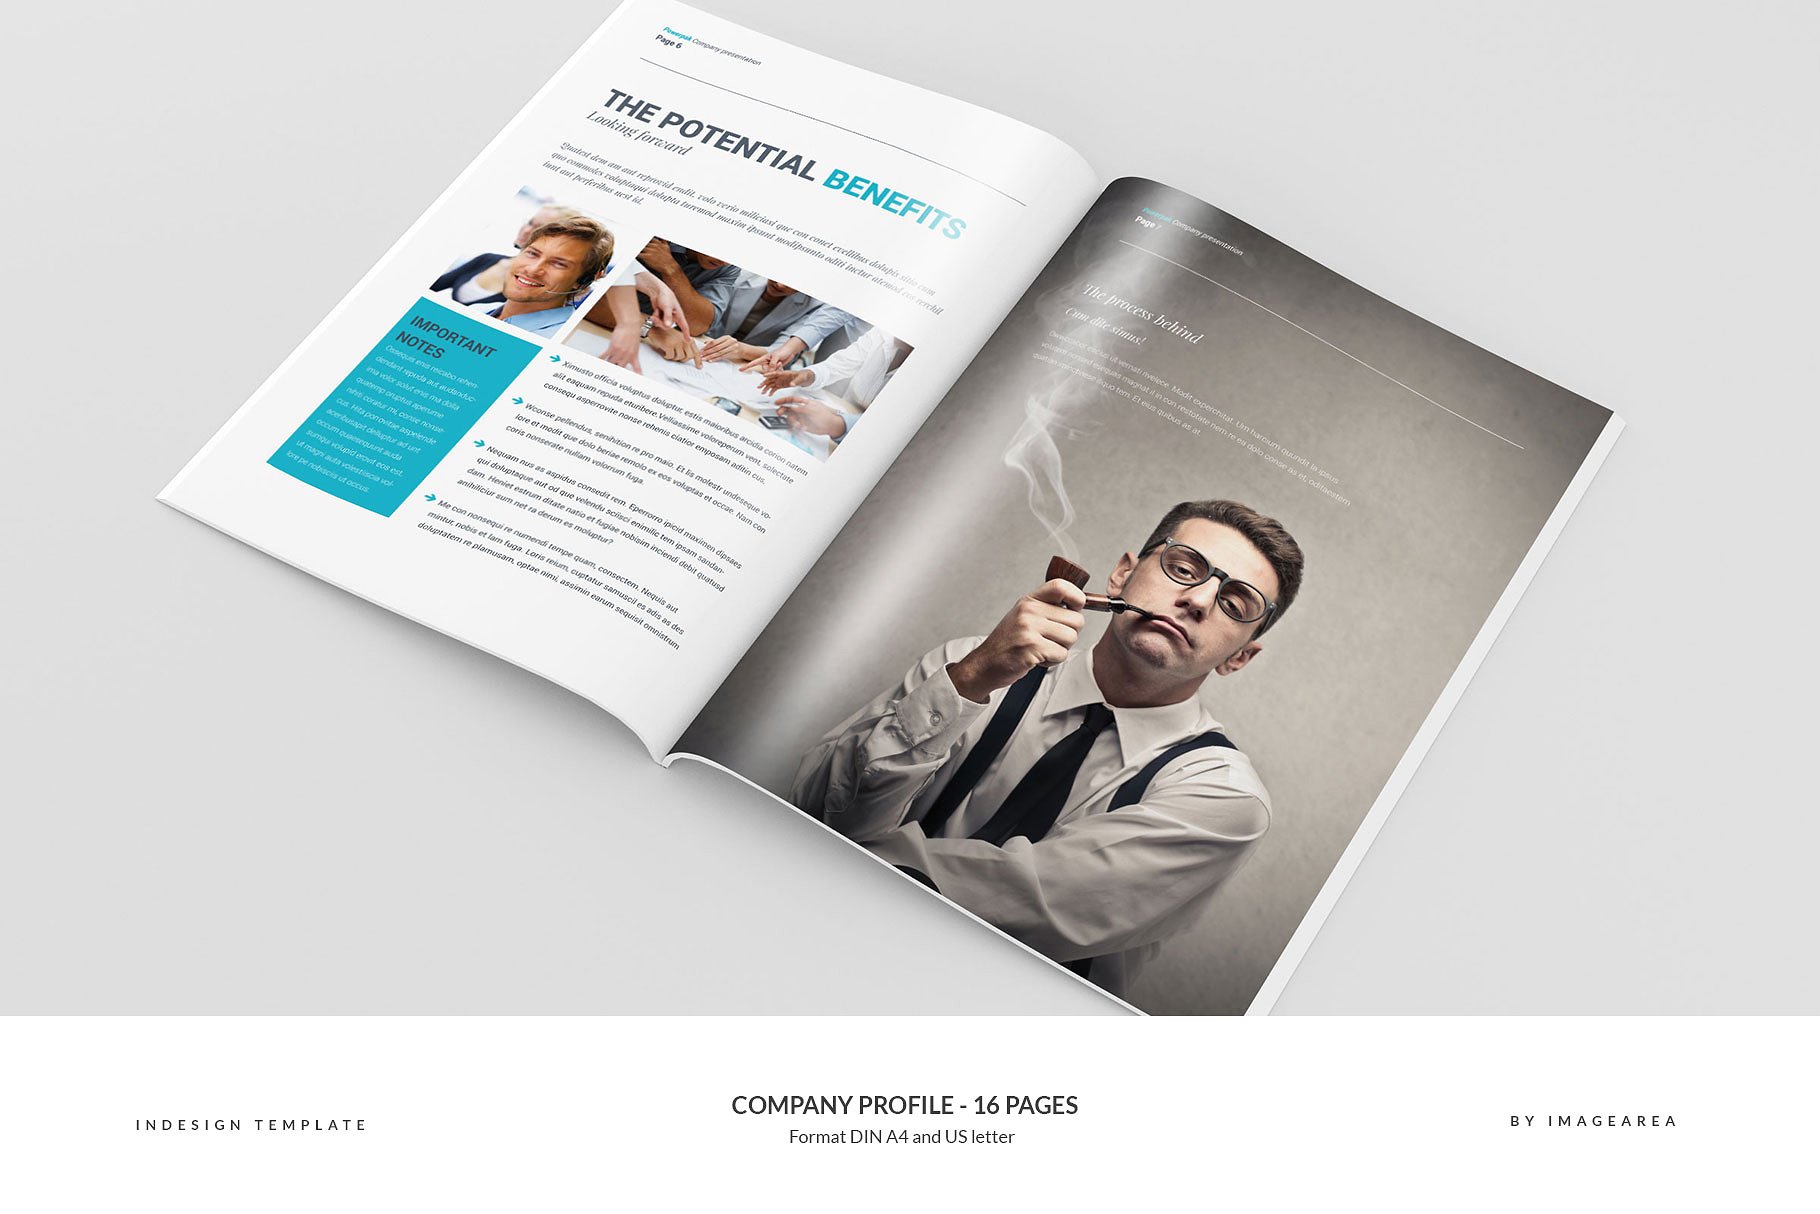 企业宣传画册设计模板 Company Profile – 16 Pages插图(4)